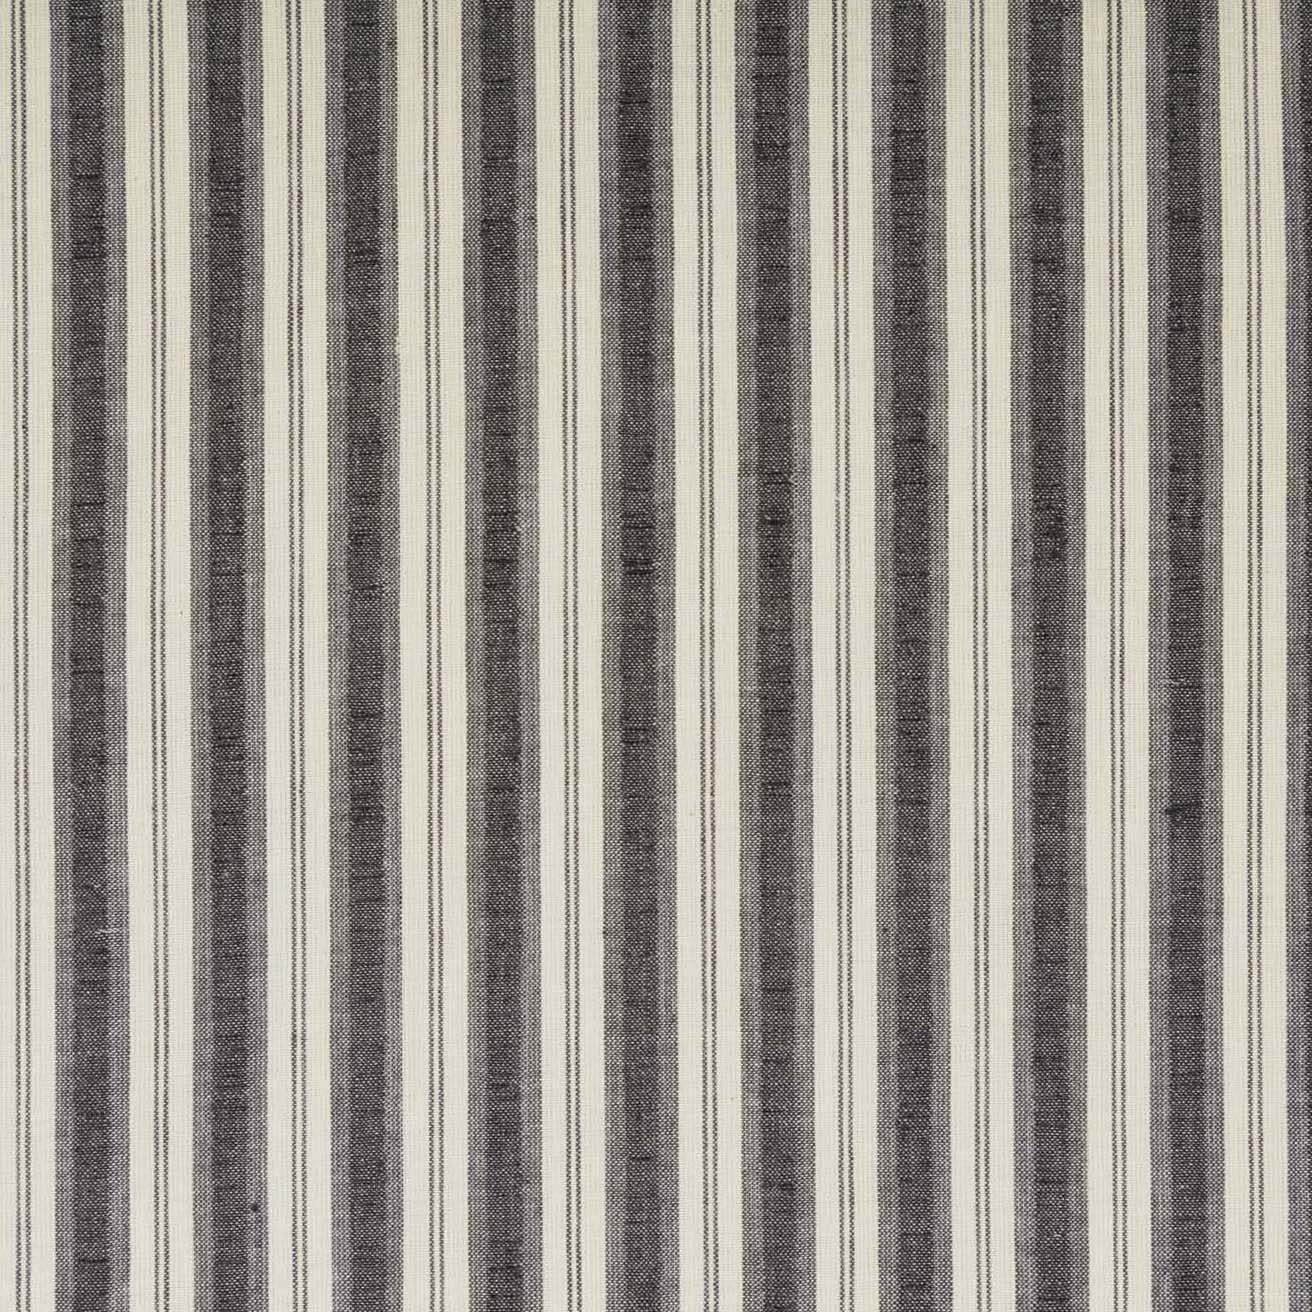 Ashmont Ticking Stripe Prairie Long Panel Set of 2 84x36x18 VHC Brands